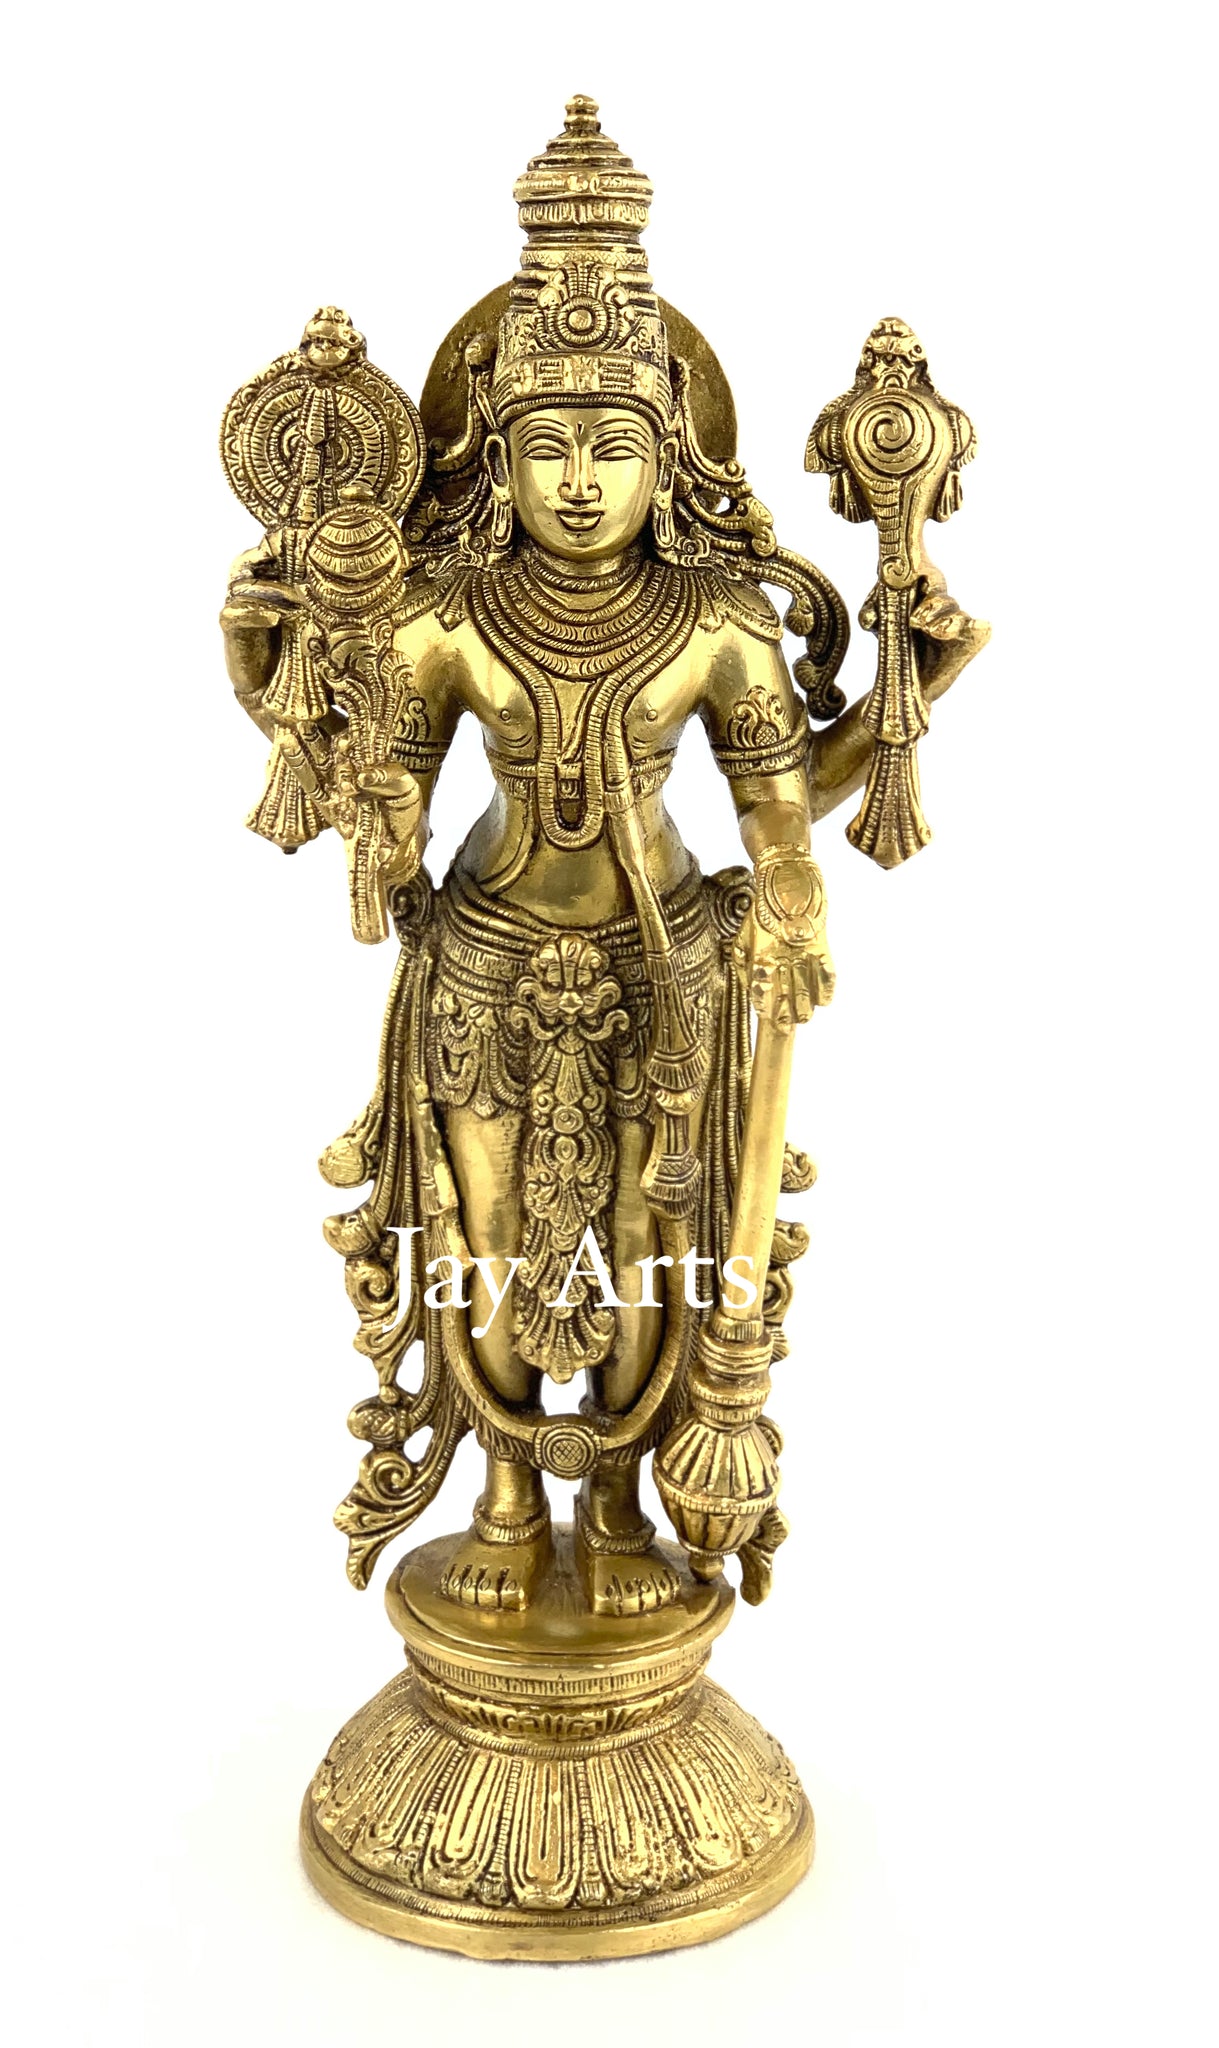 Lord Vishnu standing on a Lotus